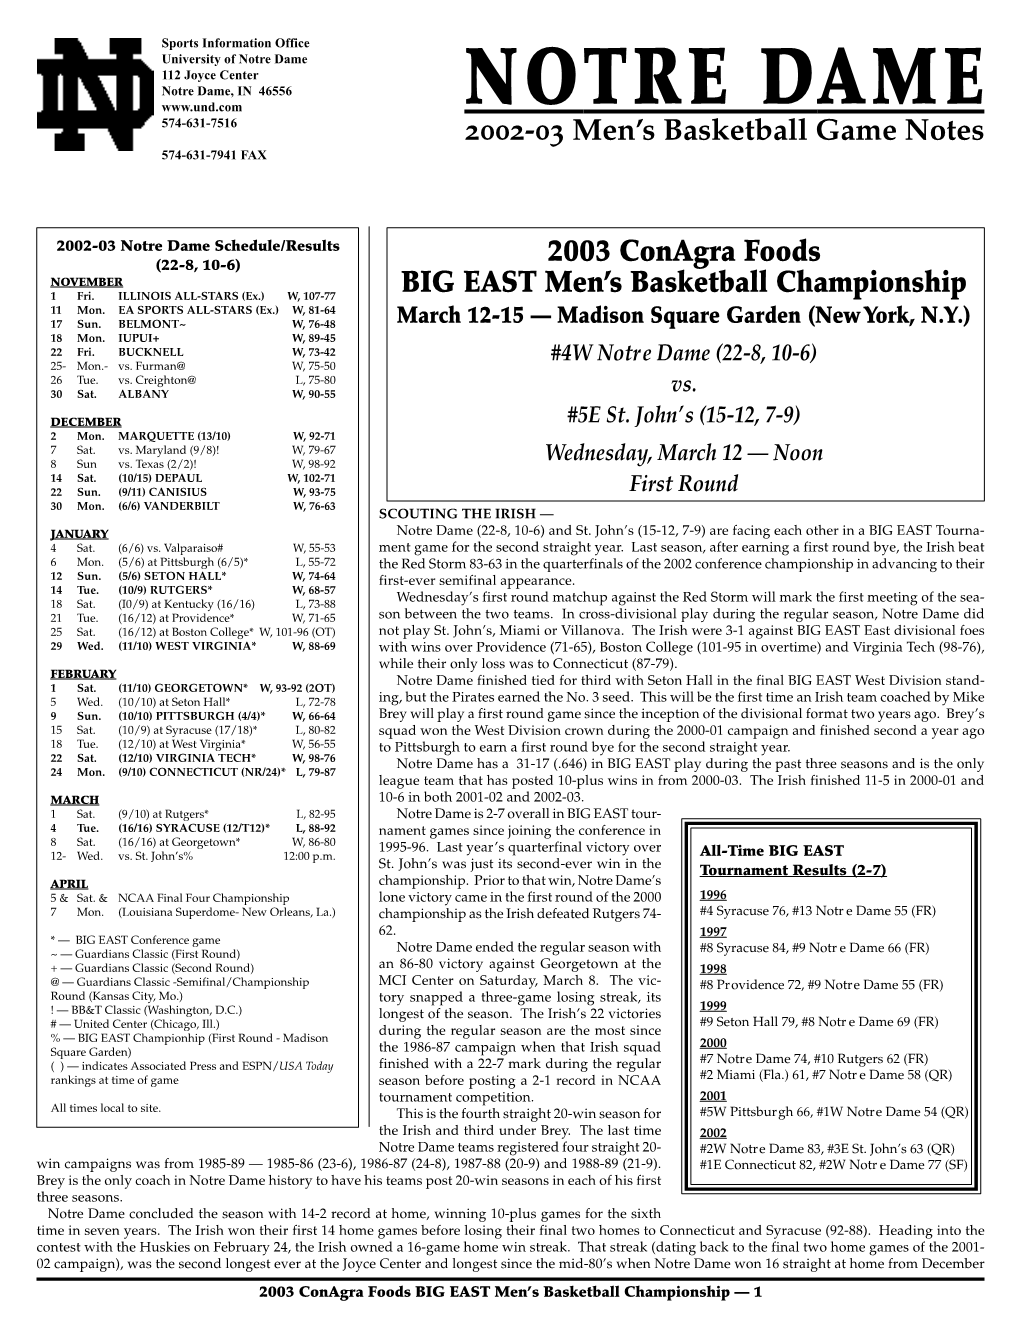 2003 Conagra Foods BIG EAST Men's Basketball Championship